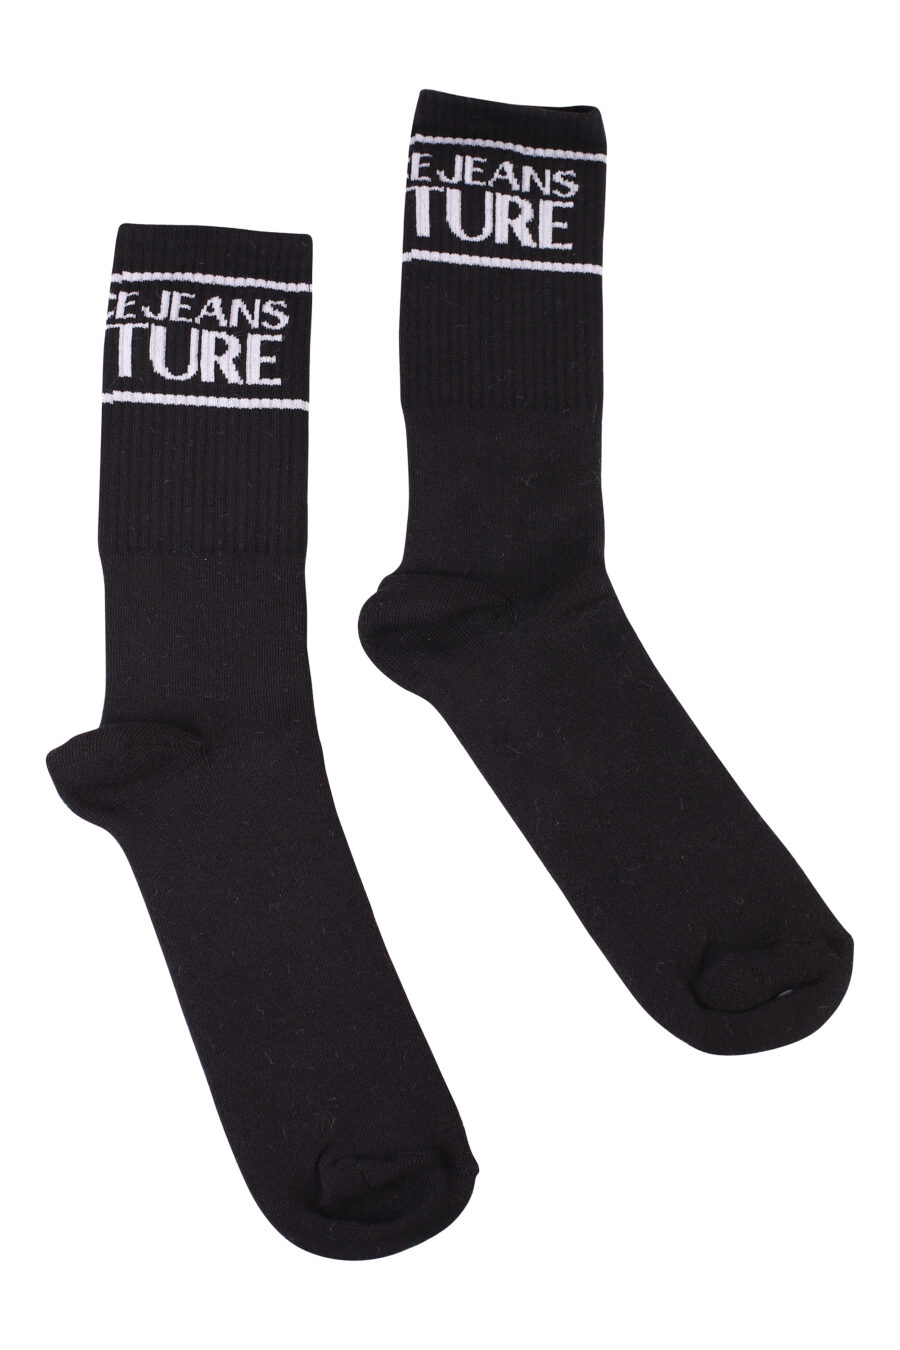 Black socks with white horizontal logo - IMG 8545